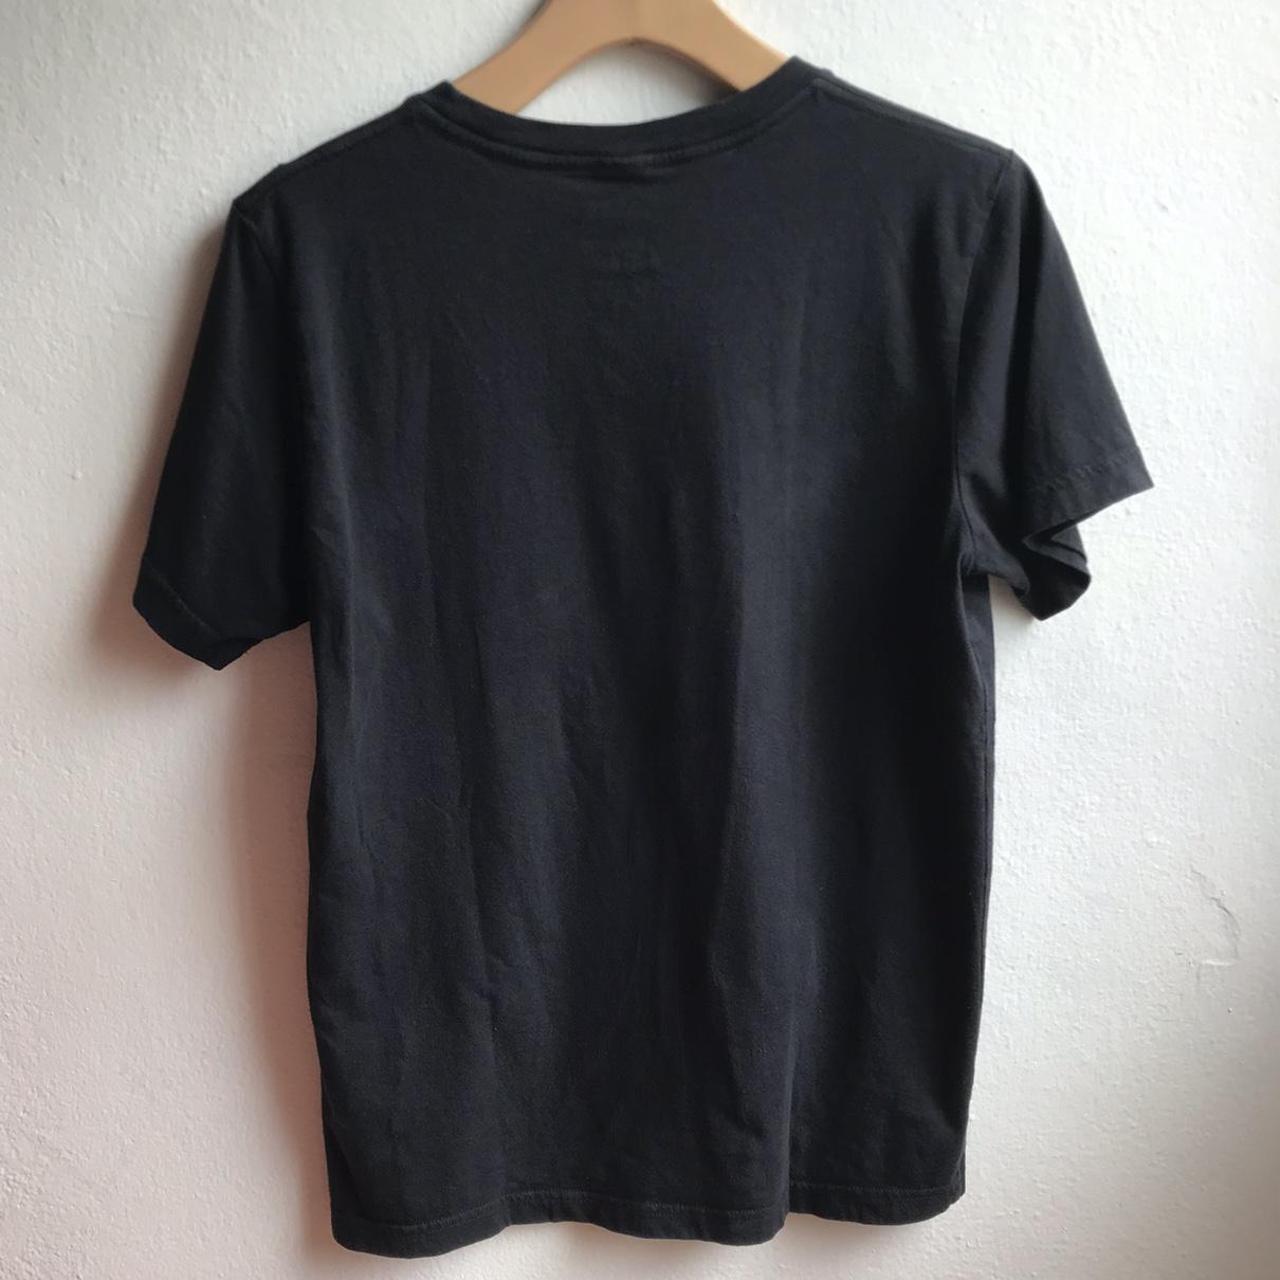 Product Image 3 - Poler Outdoor Stuff t-shirt
Size: Medium
Condition: